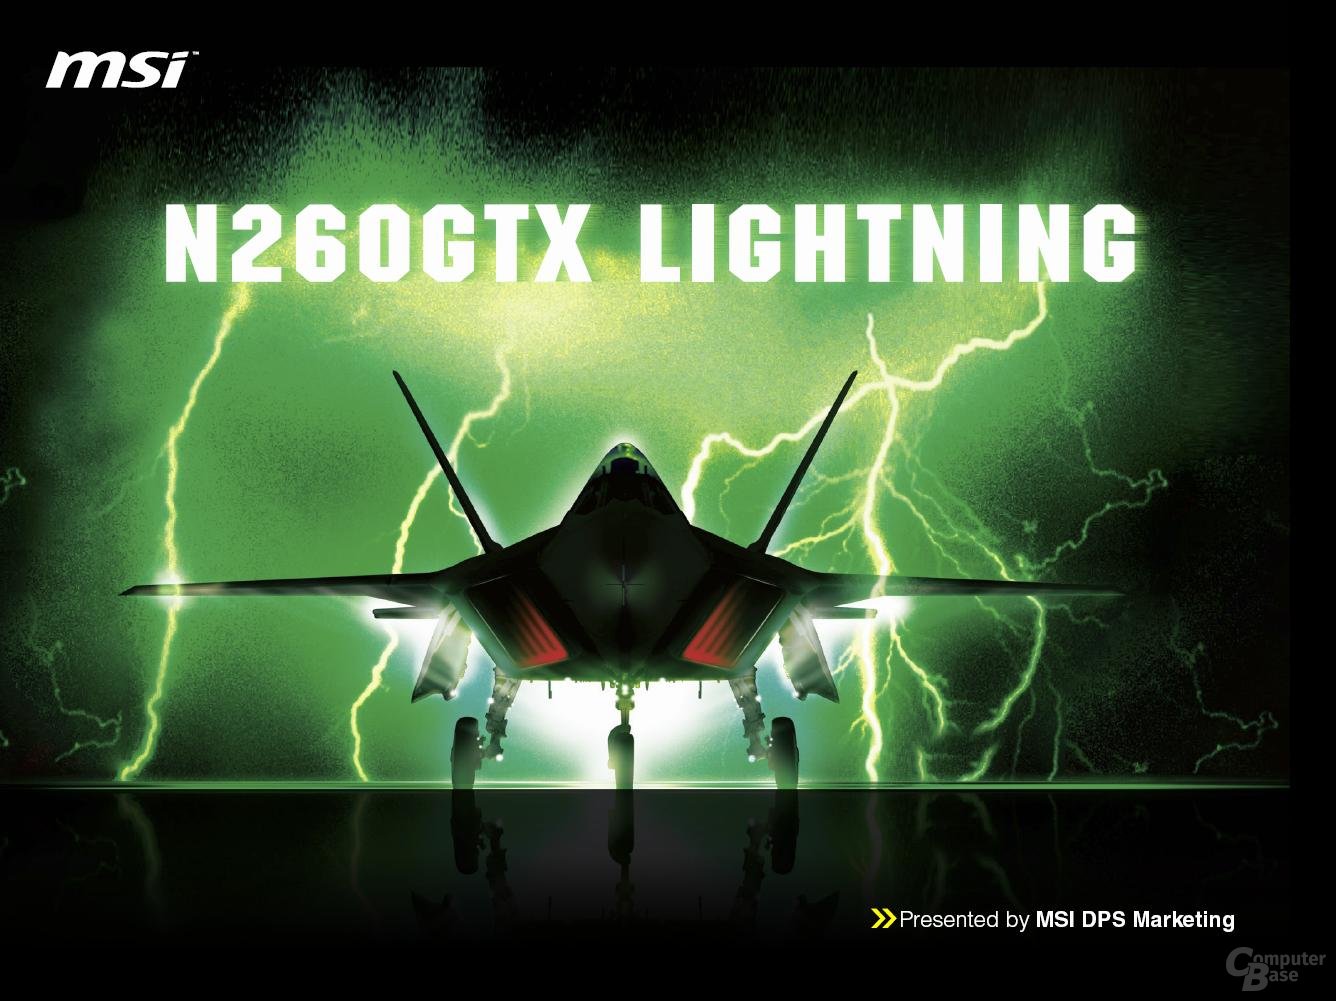 MSI GeForce GTX 260 Lightning